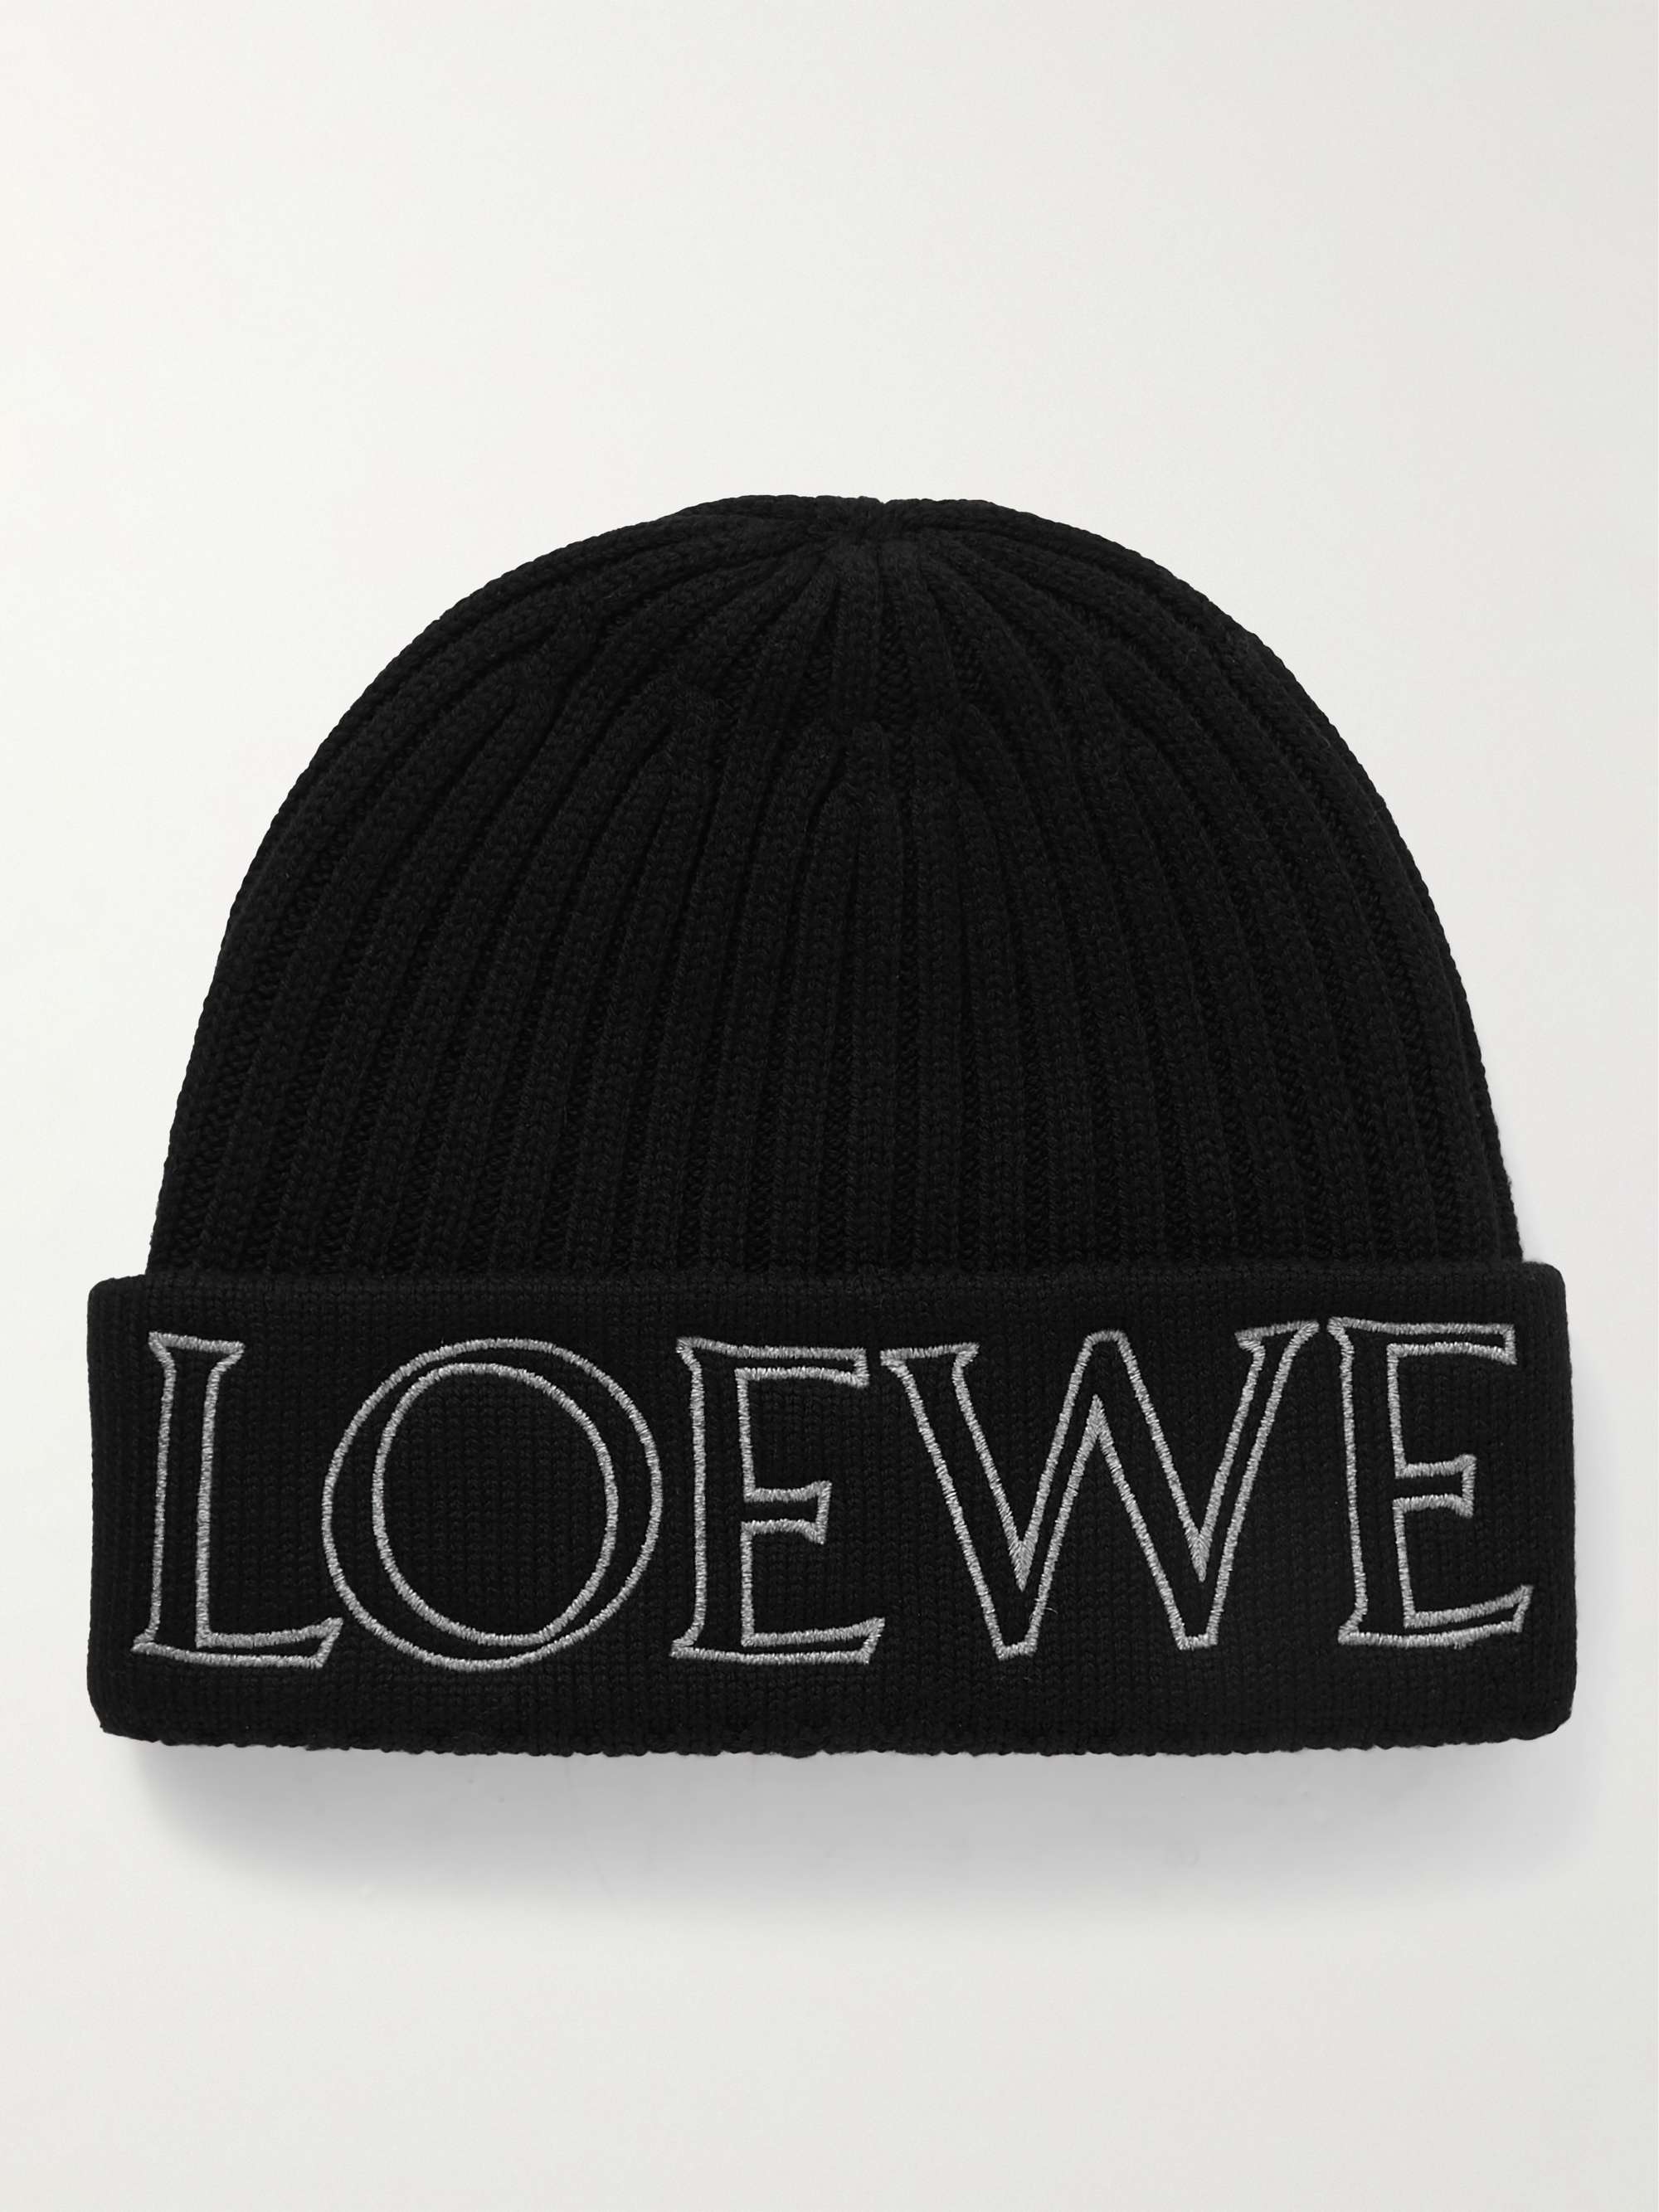 Loewe Wool-Blend Logo Beanie